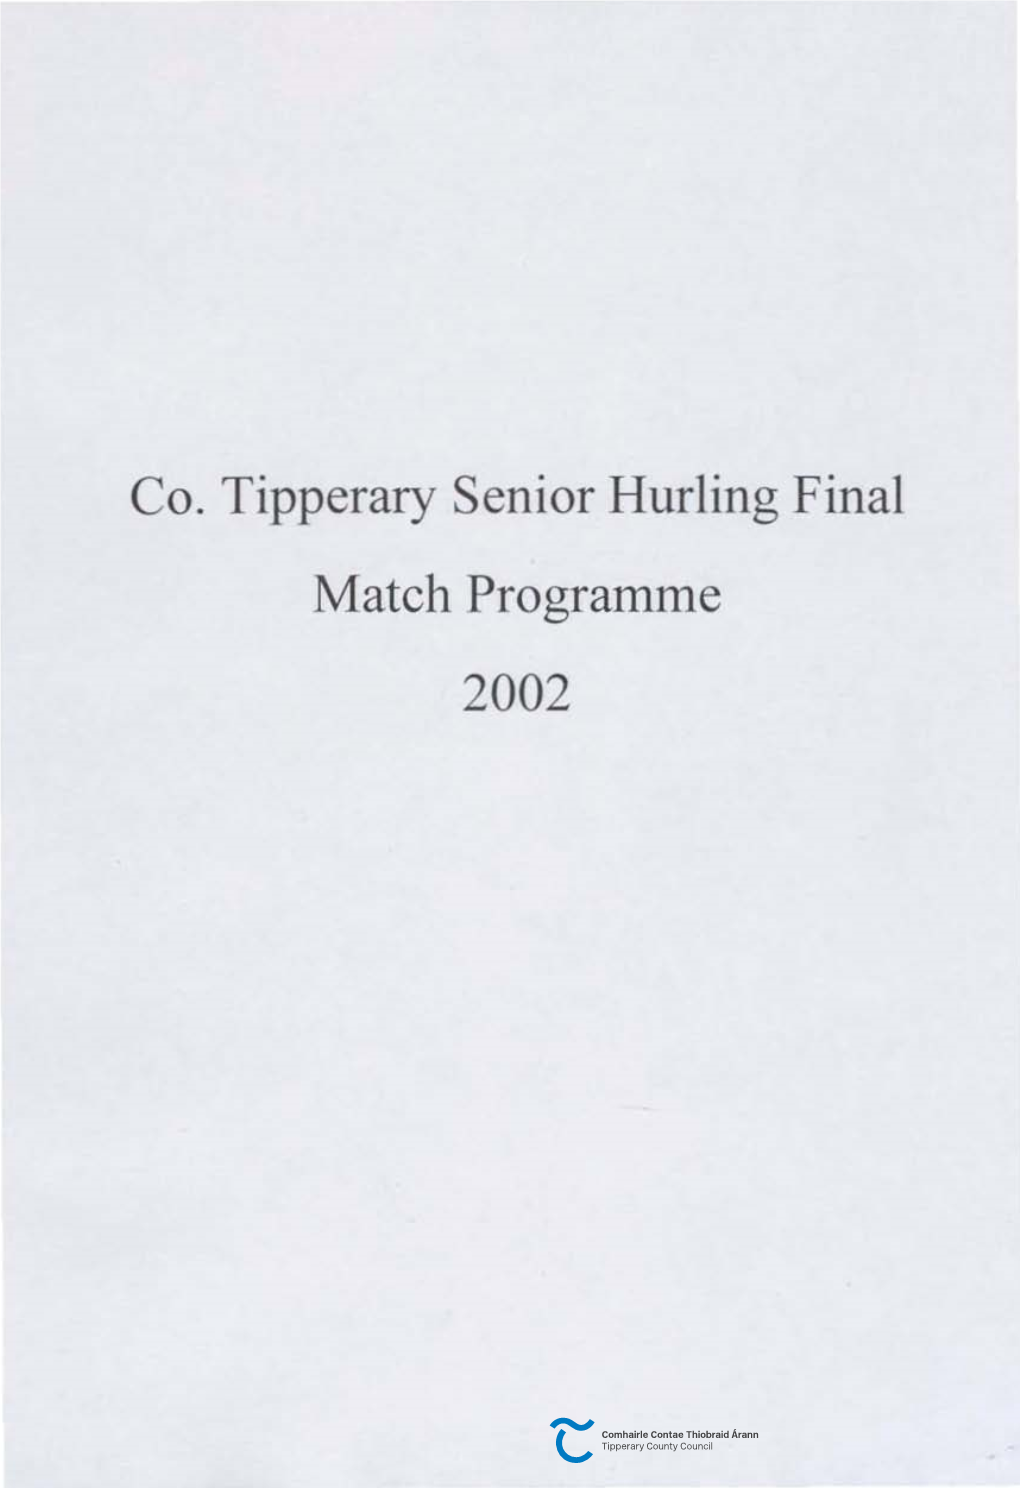 Co. Tipperary Senior Hurling Final Match Programme 2002